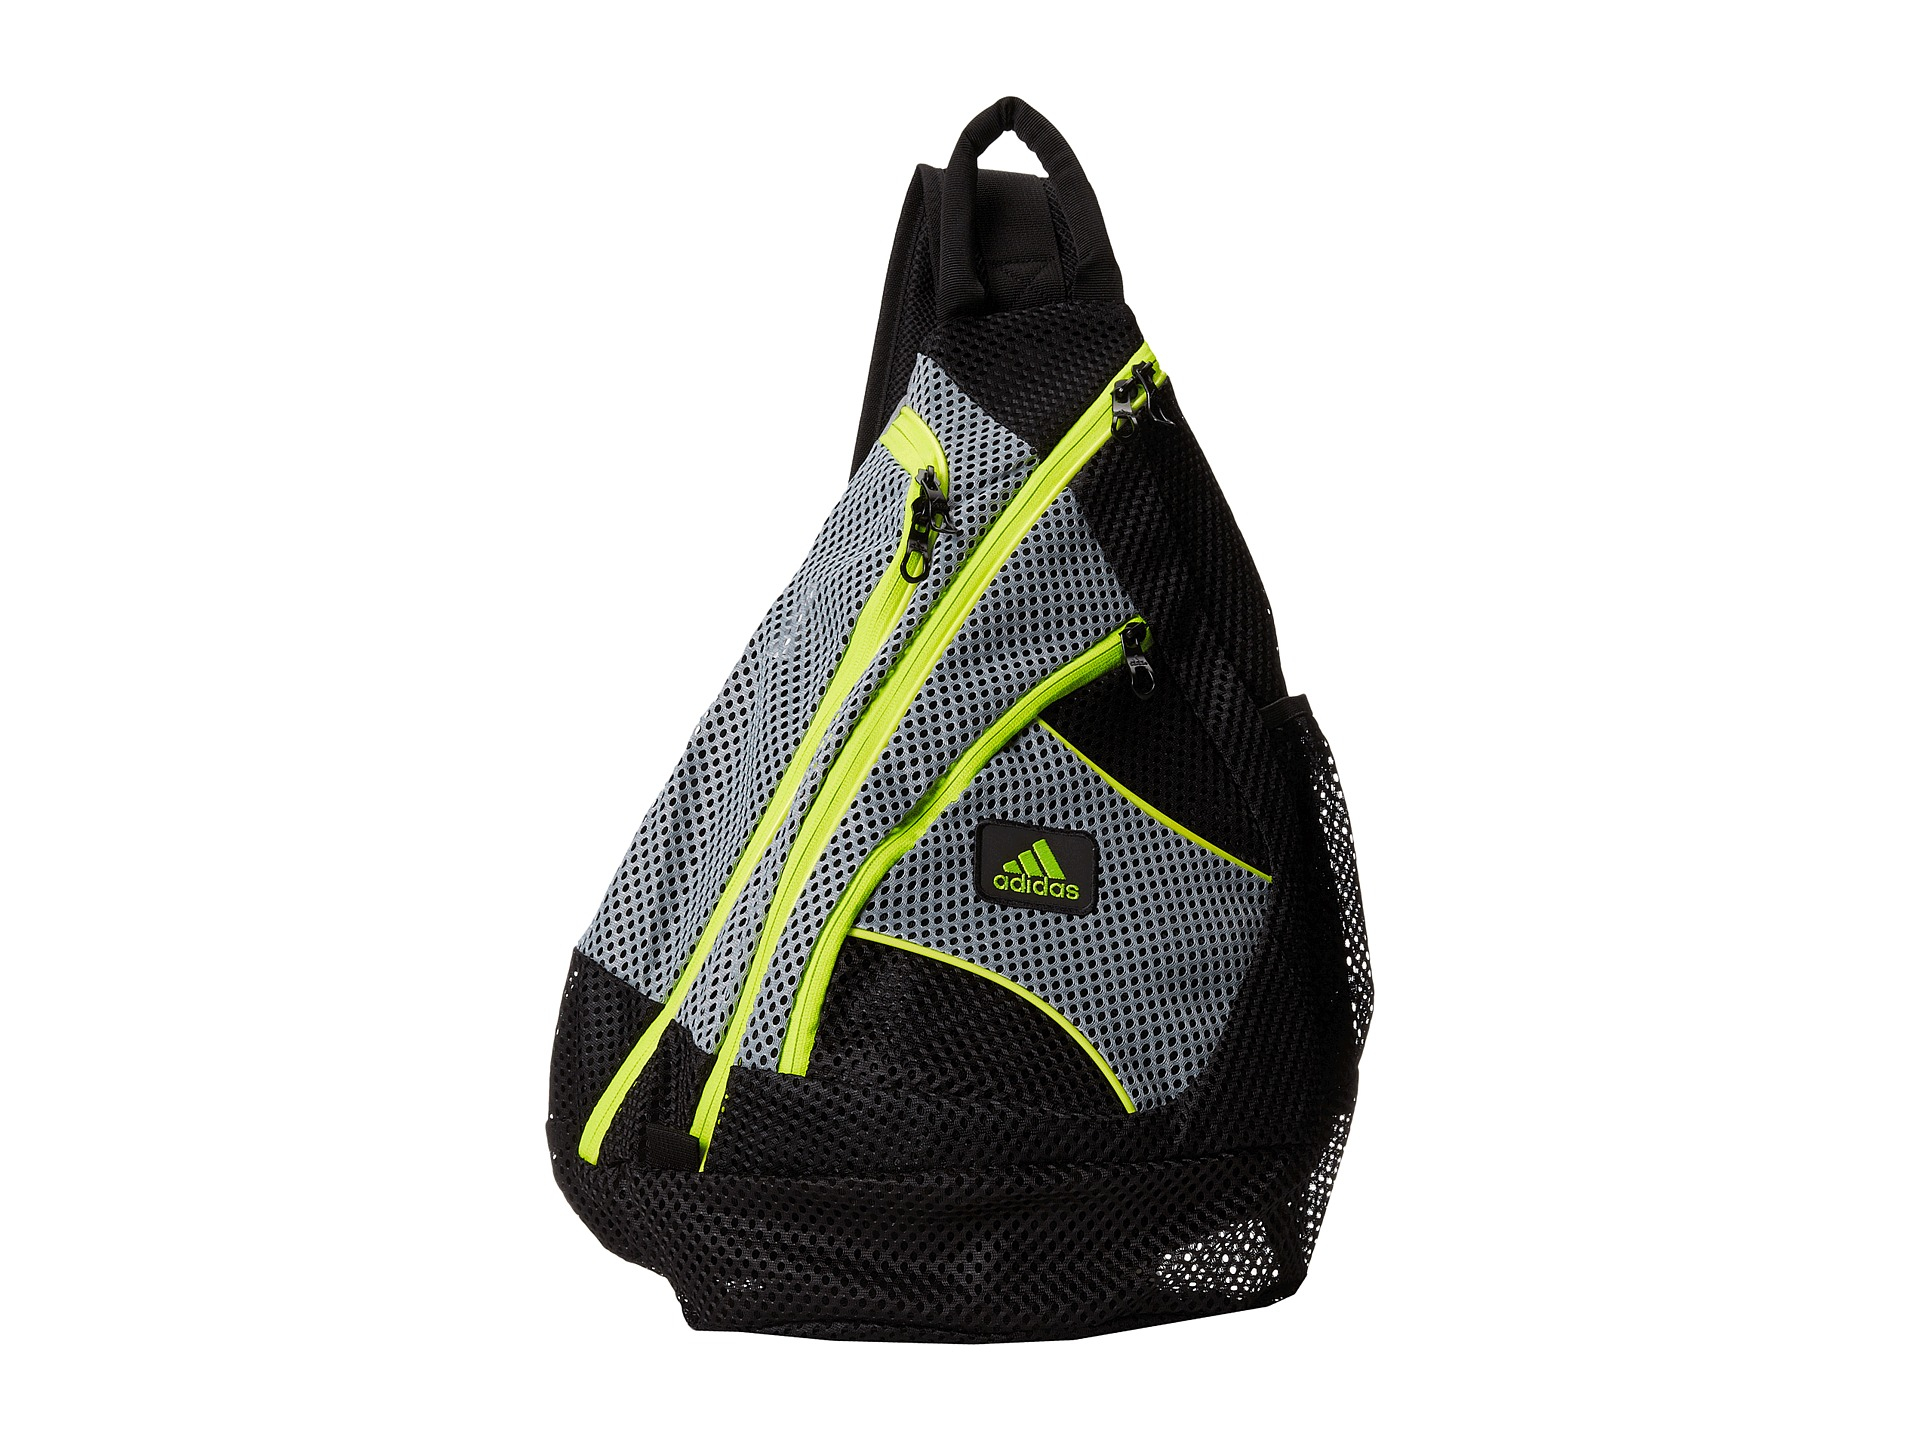 adidas sling mesh backpack